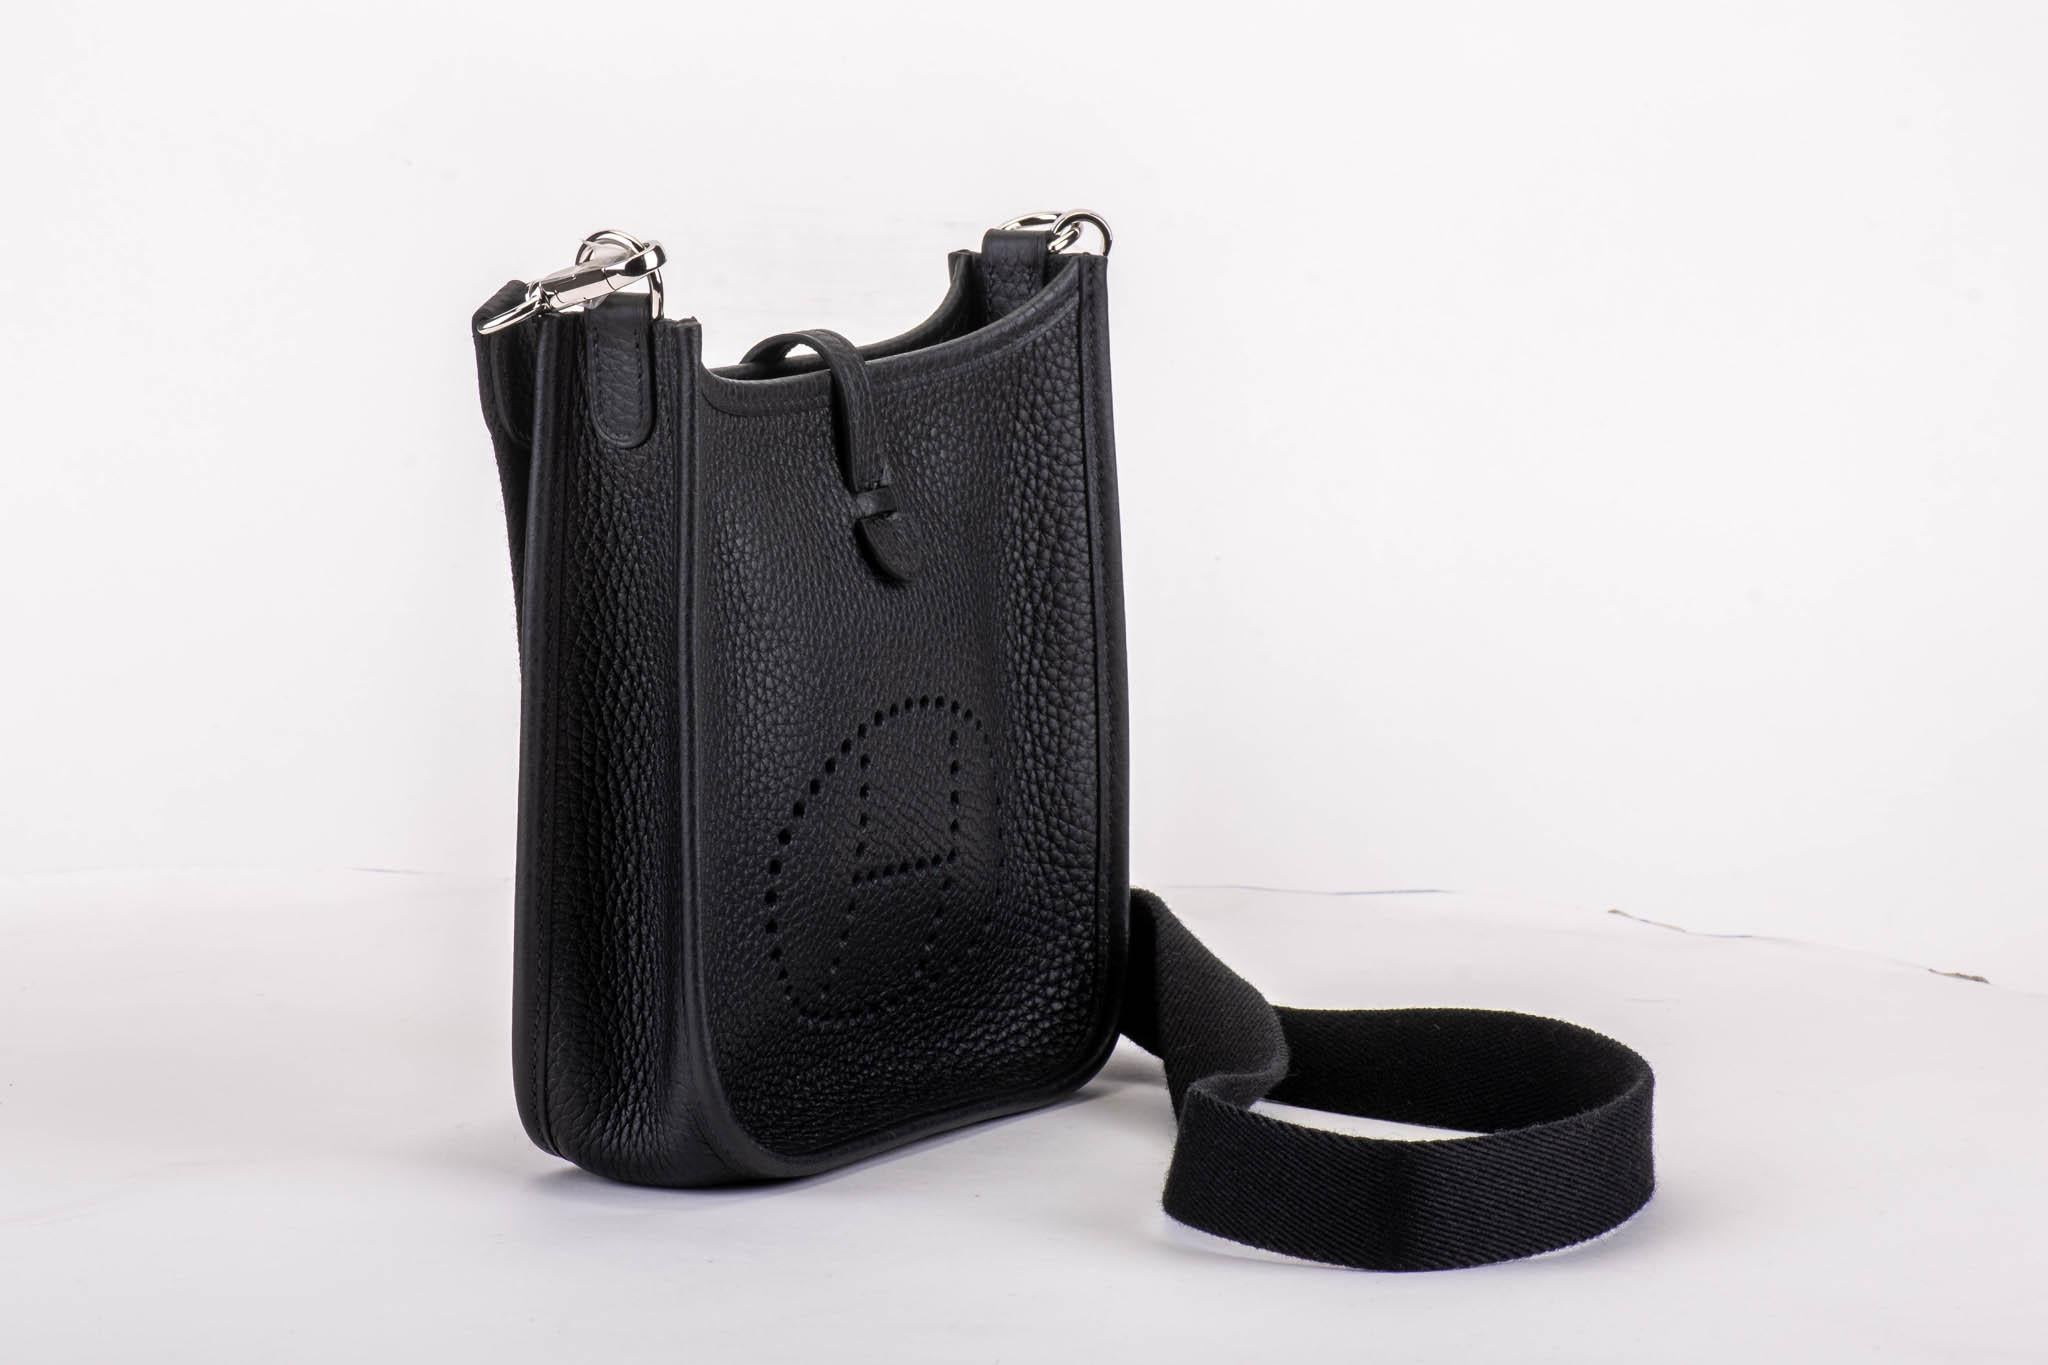 Hermès mini Evelyne bag in black clemence leather with palladium hardware. Shoulder drop, 22.5